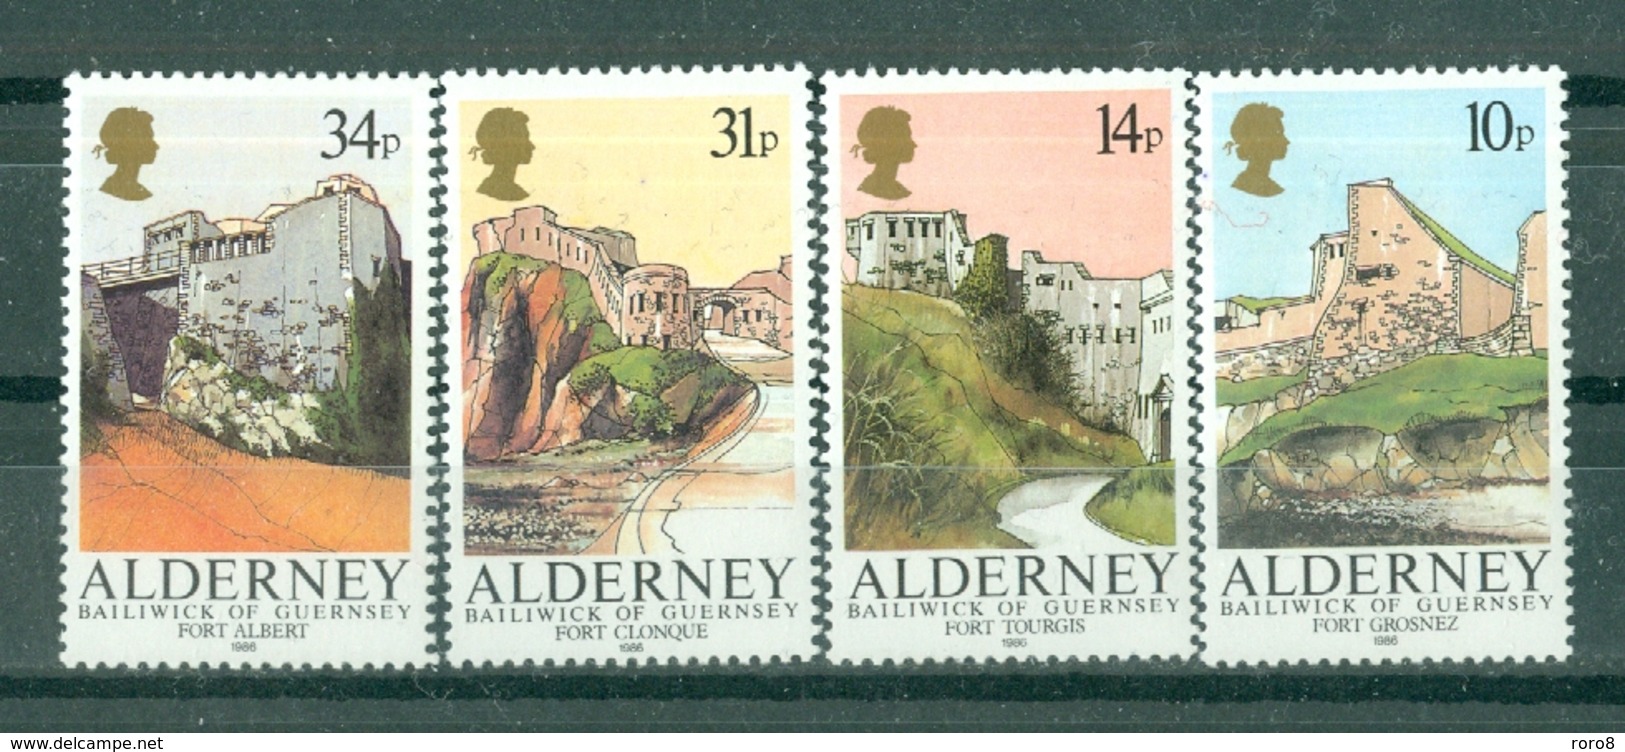 AURIGNY - ALDERNEY - N° 28** MNH à  31** MNH LUXE FRAICHEUR POSTALE - Fortifications Typiques. - Alderney